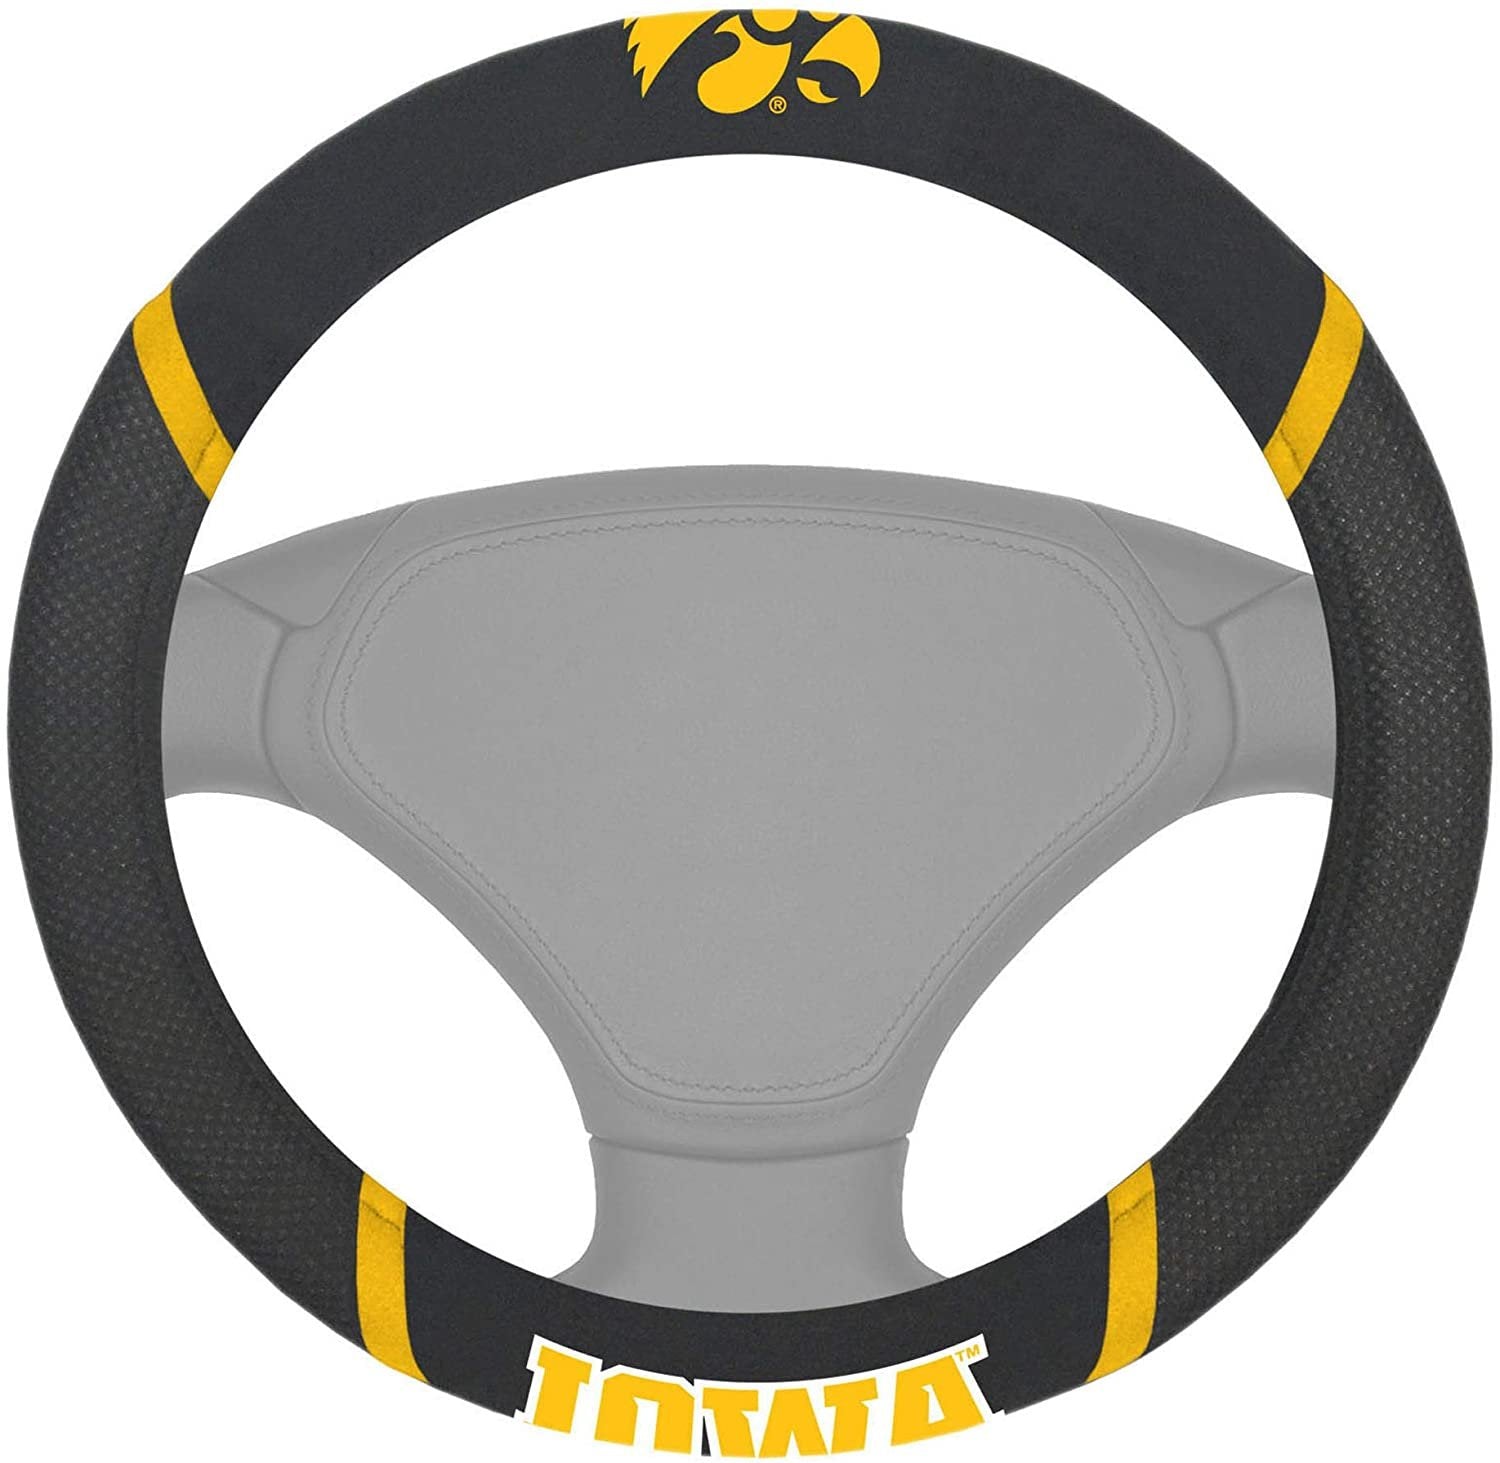 Iowa Hawkeyes Steering Wheel Cover Premium Embroidered Black 15 Inch University of